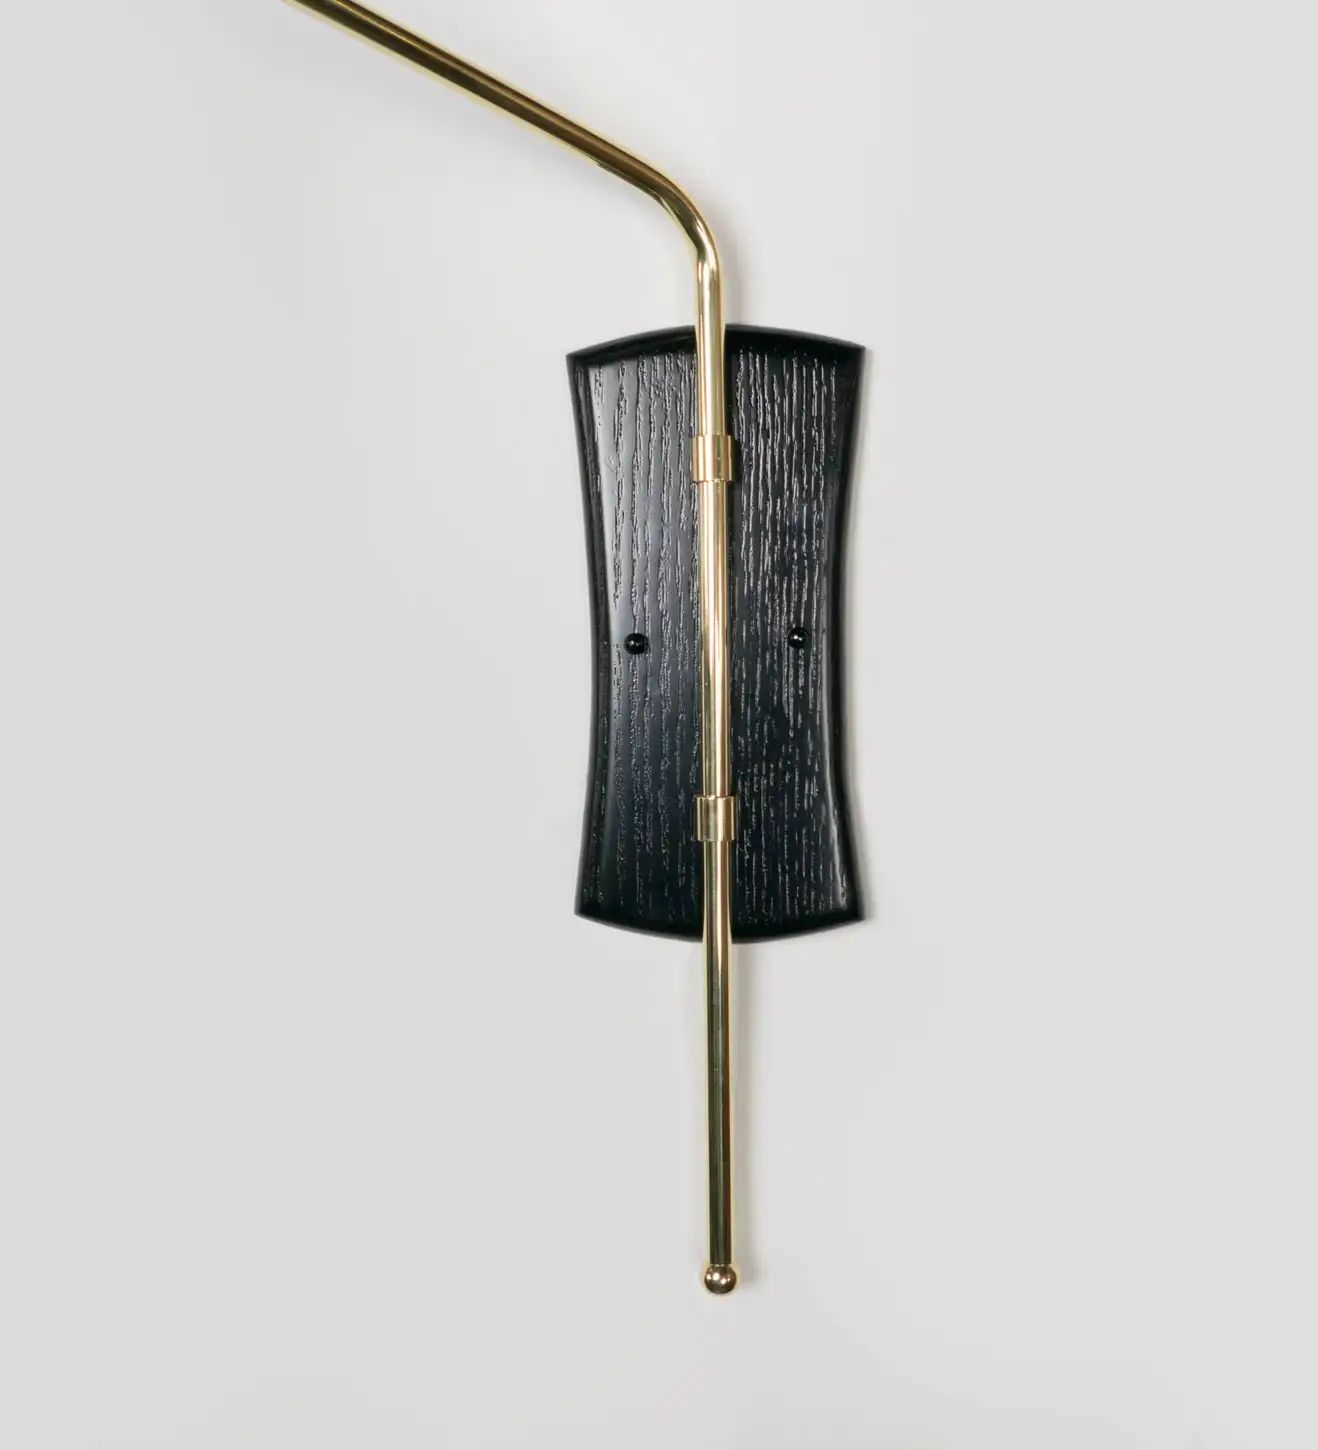 Set of 2 wall lamps (Sconces) BASTILLE by Bourgeois Boheme Atelier